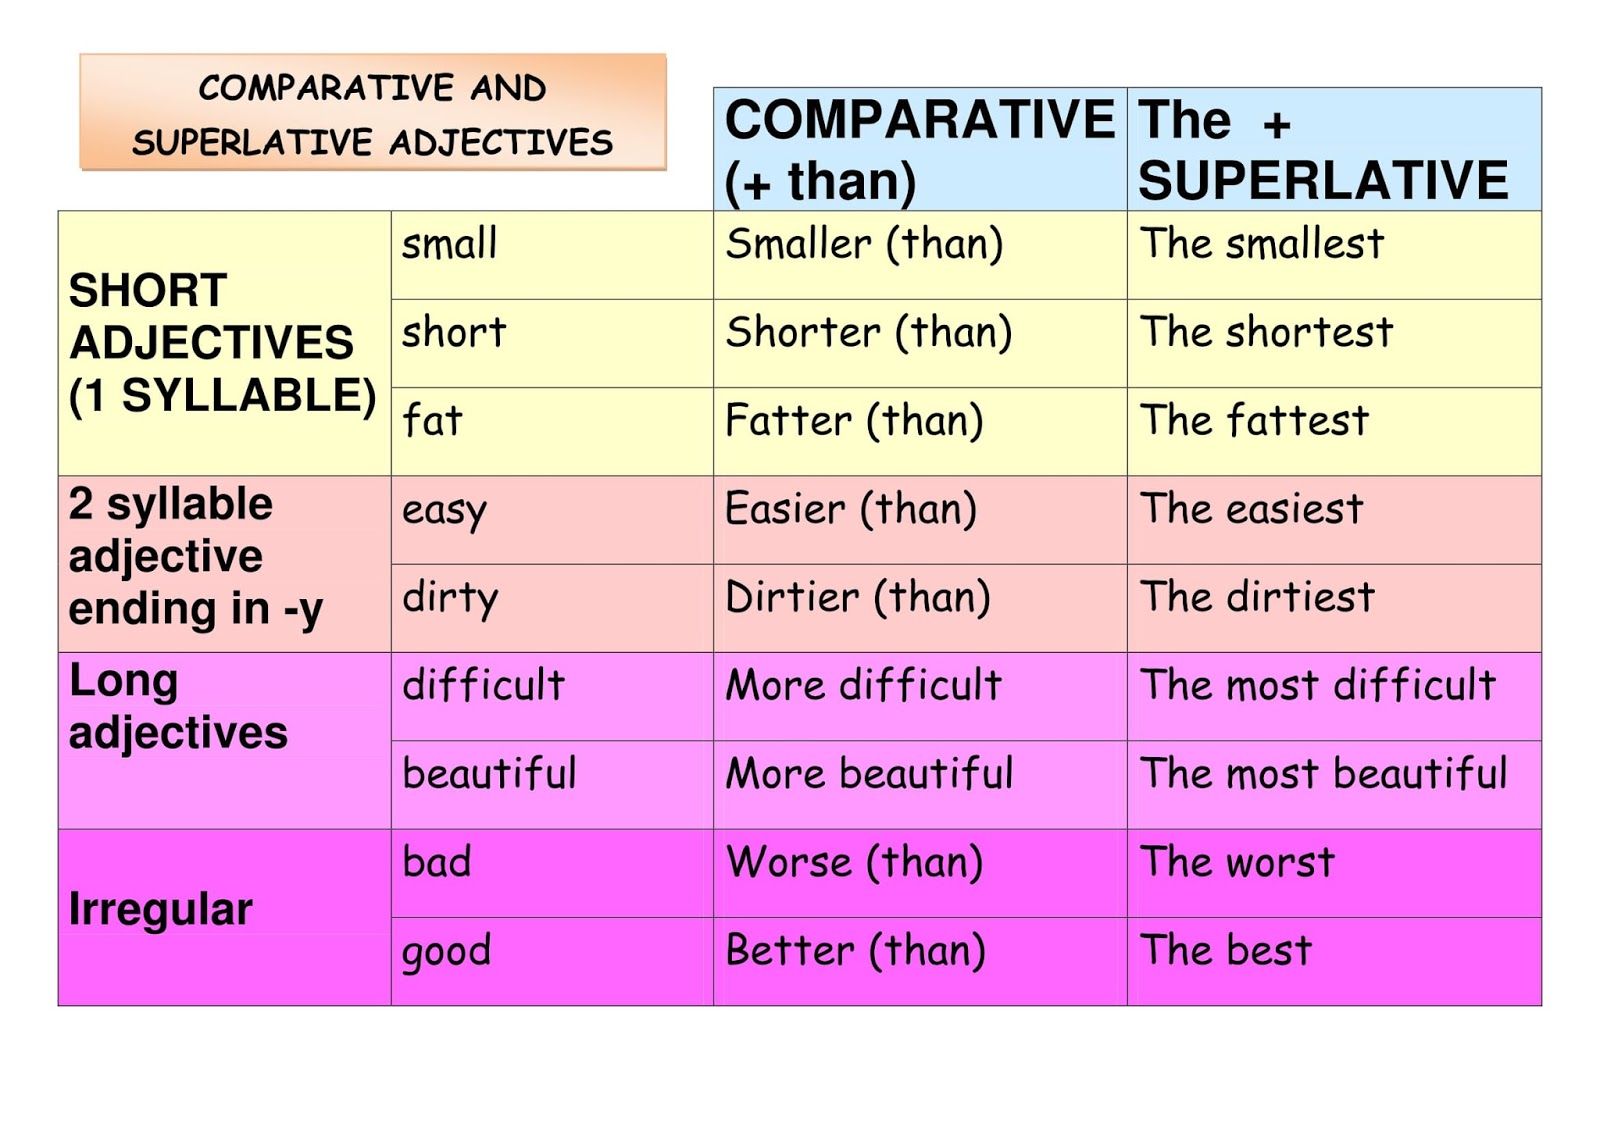 comparatives-and-superlatives-adjectives-english-adjectives-sexiz-pix